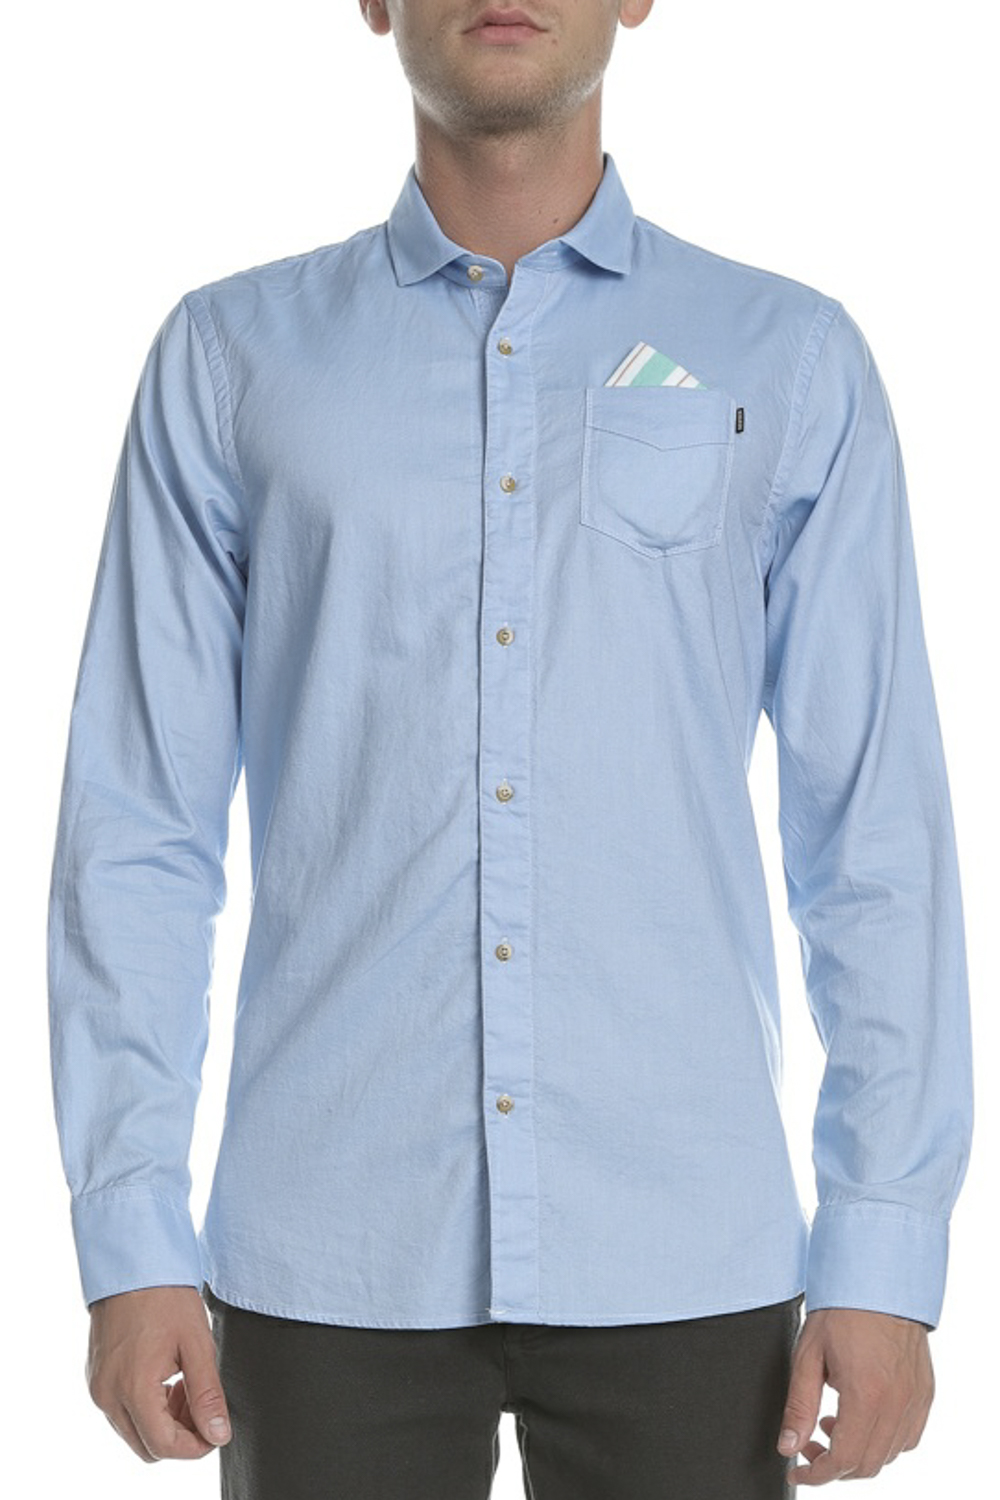 SCOTCH & SODA SCOTCH & SODA - Ανδρικό μακρυμάνικο πουκάμισο Classic oxford γαλάζιο